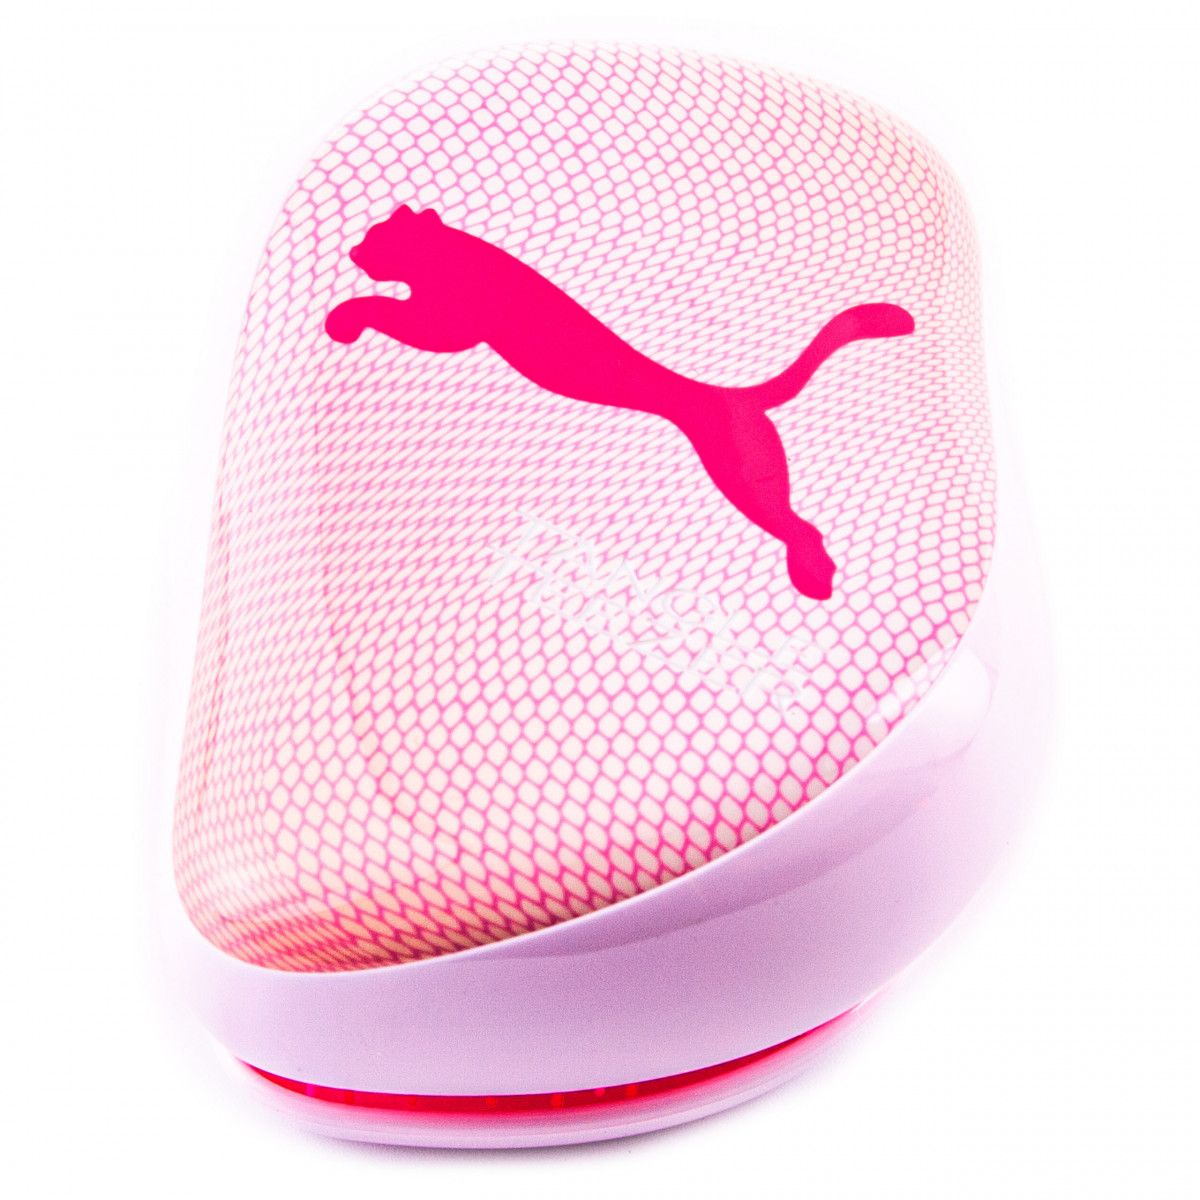 Tangle Teezer Compact Style Puma Neon Pink sklep Gobli